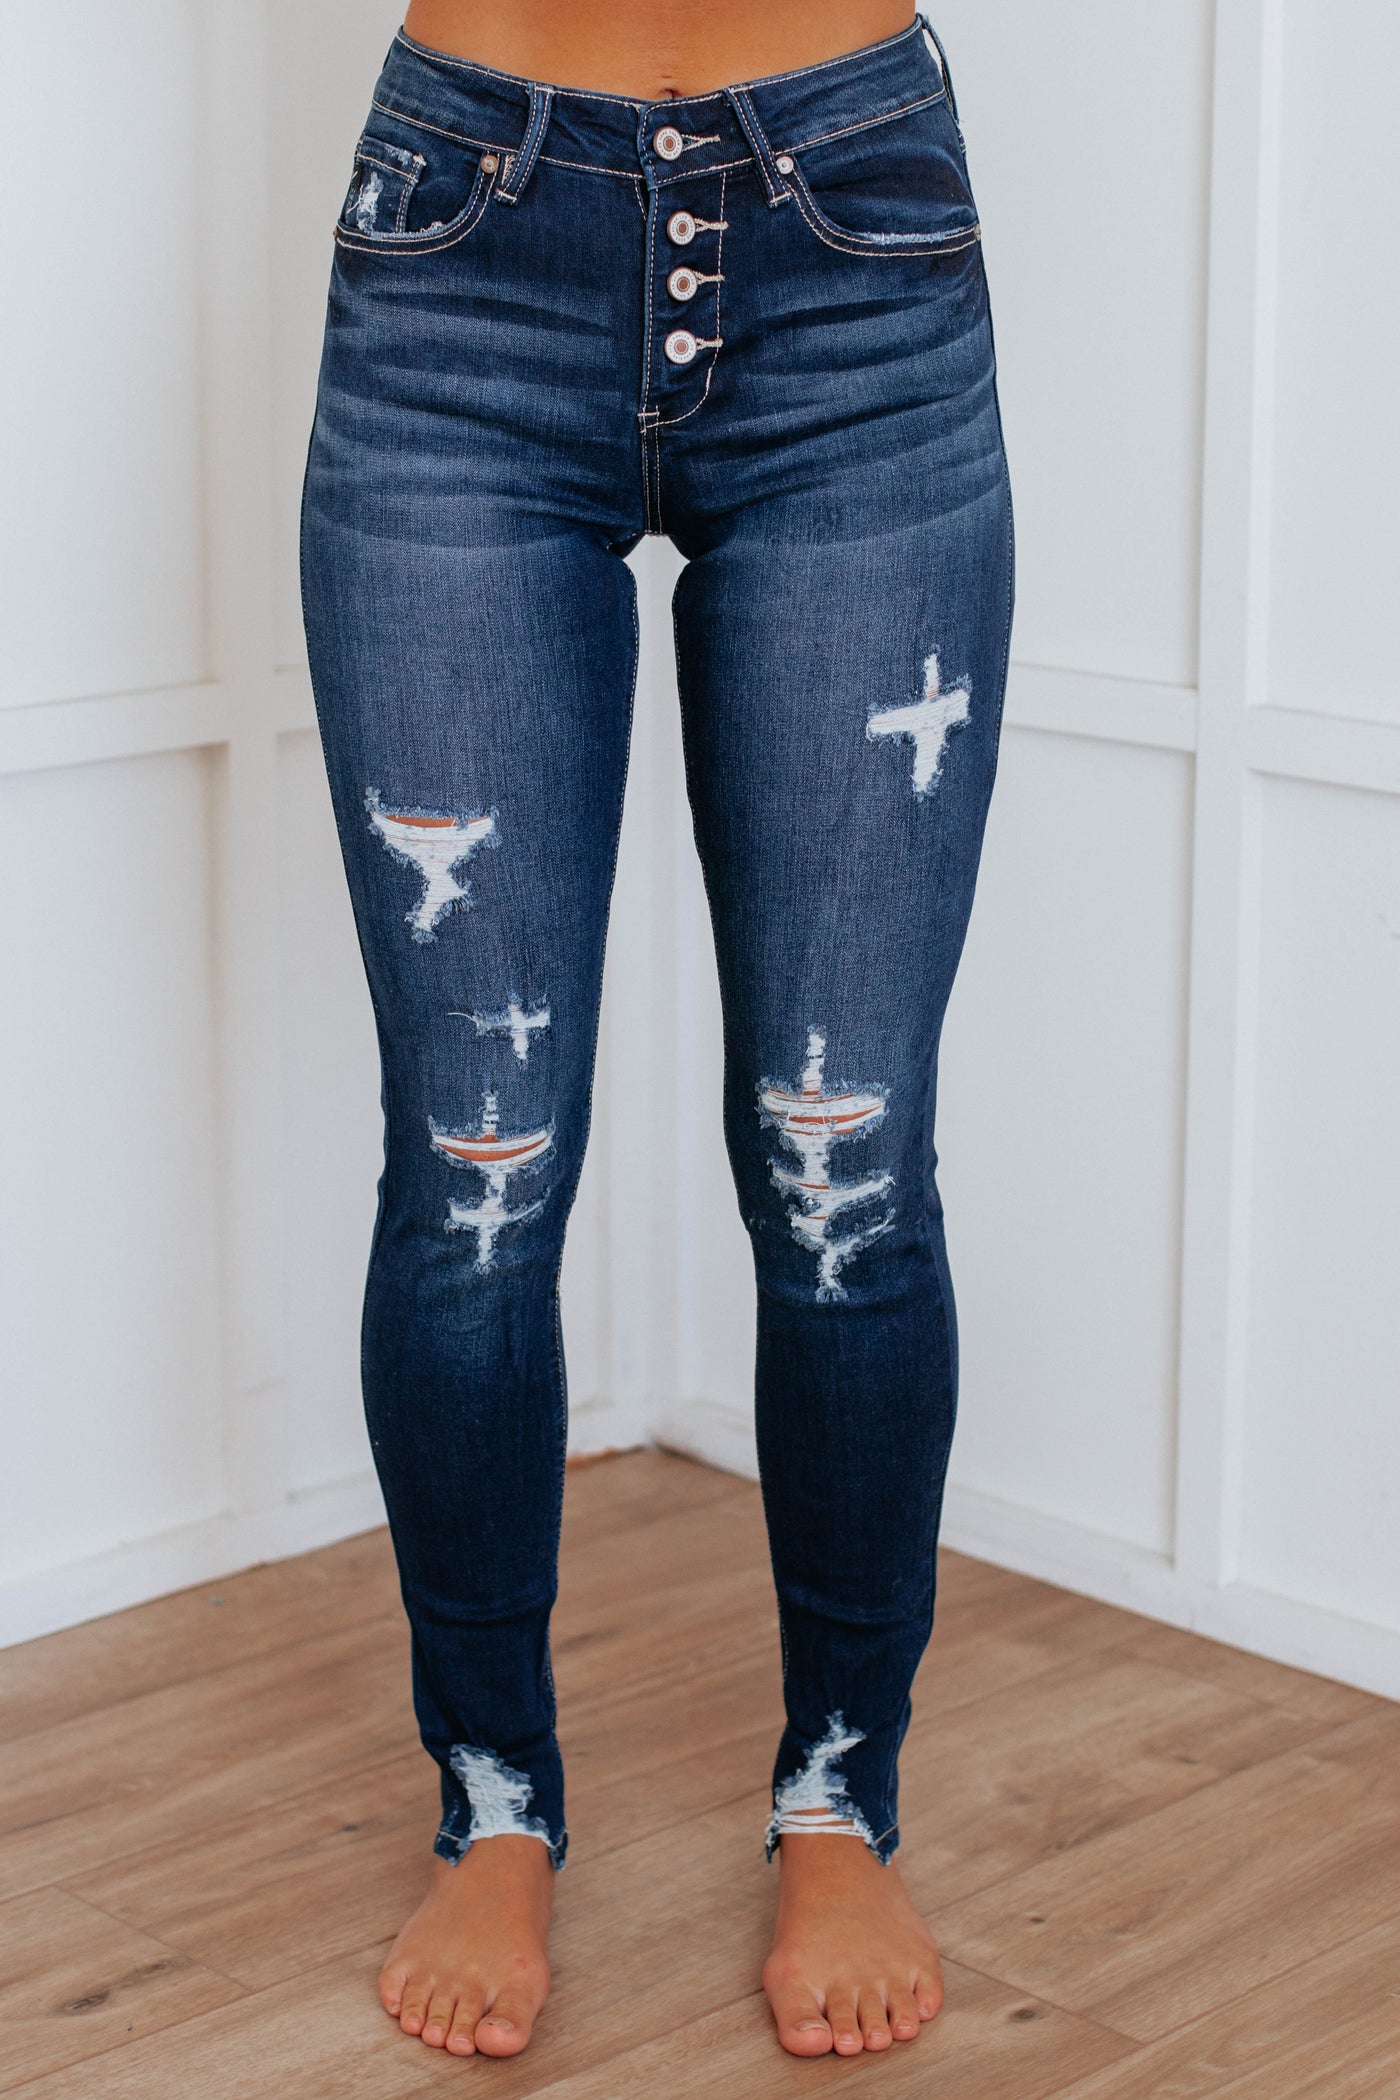 Anyah KanCan Jeans